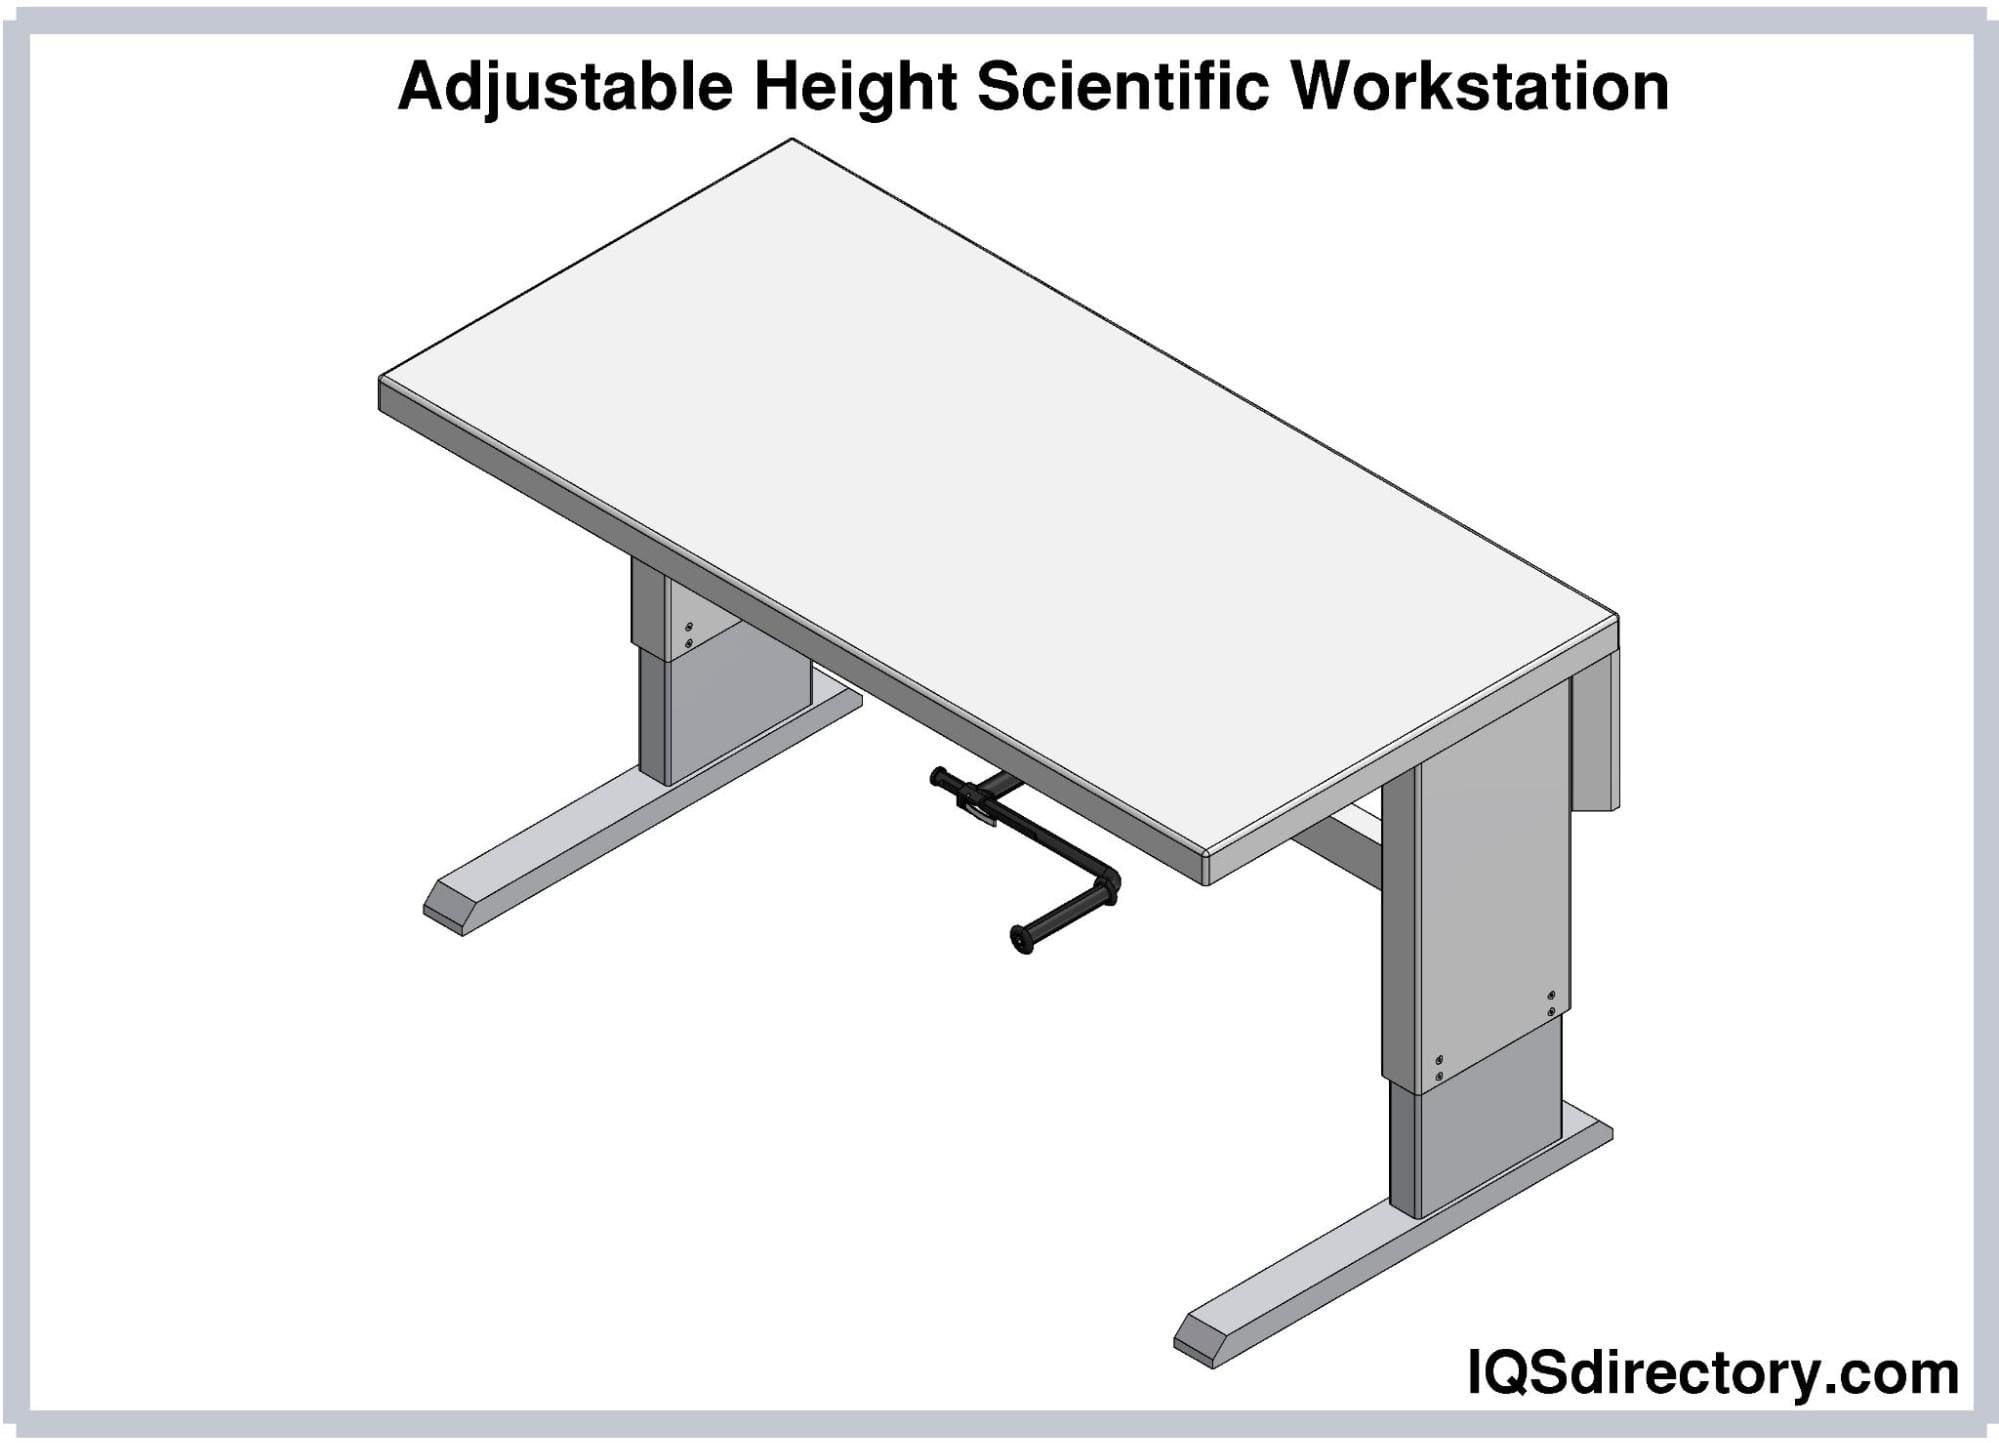 Adjustable Height Scientific Workstation